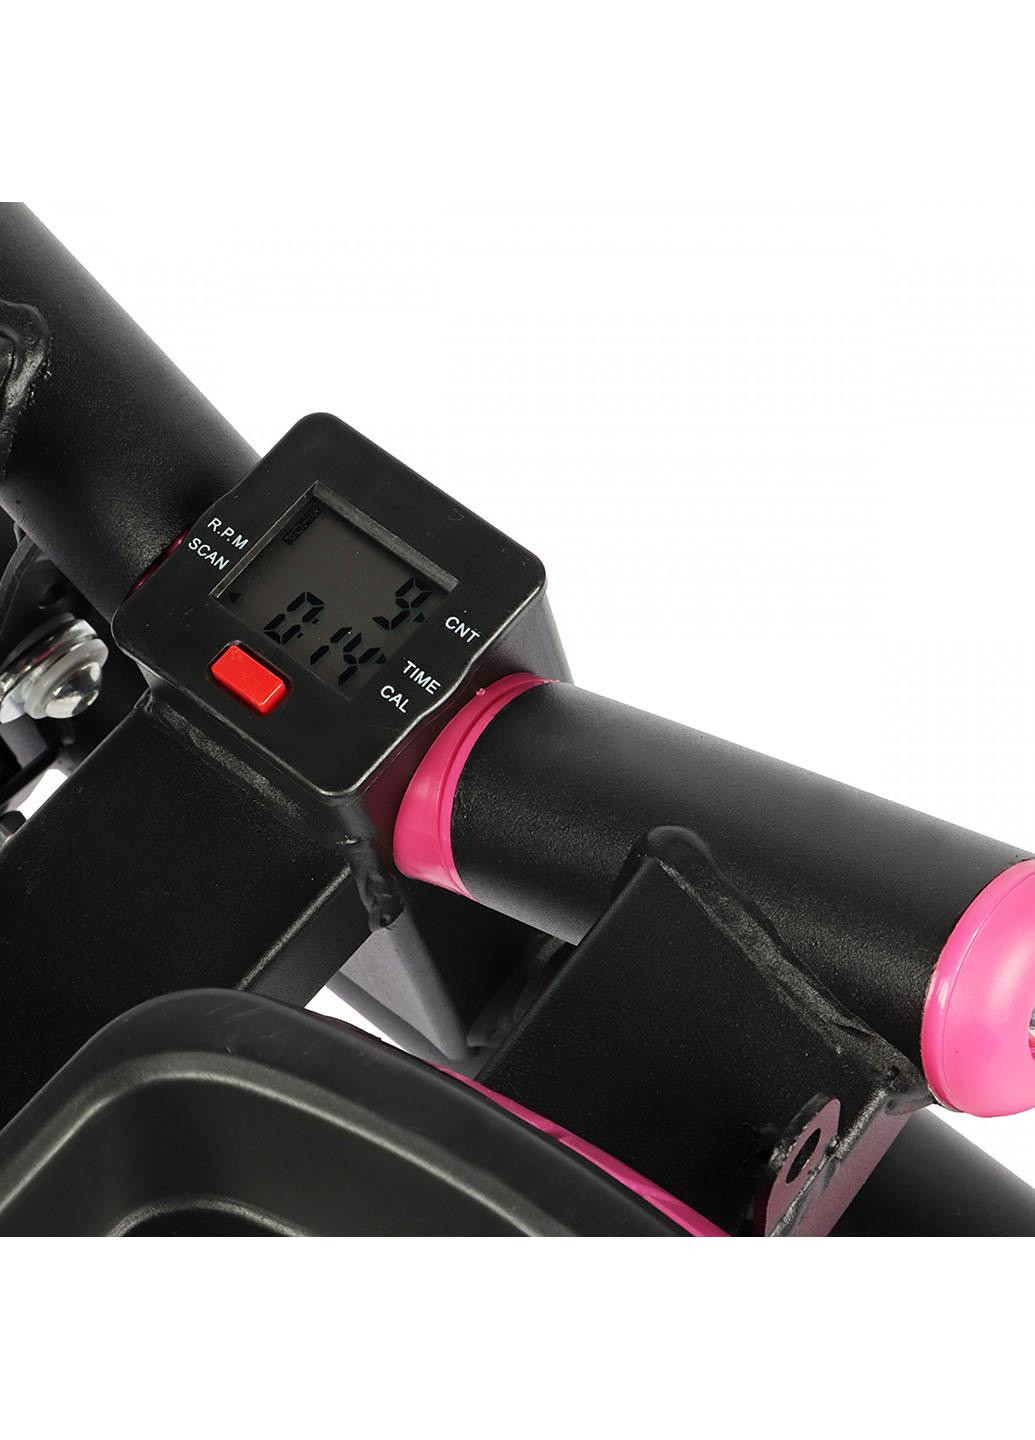 Степпер поворотный (мини-степпер) SV-HK0358 Black/Pink SportVida (258066805)